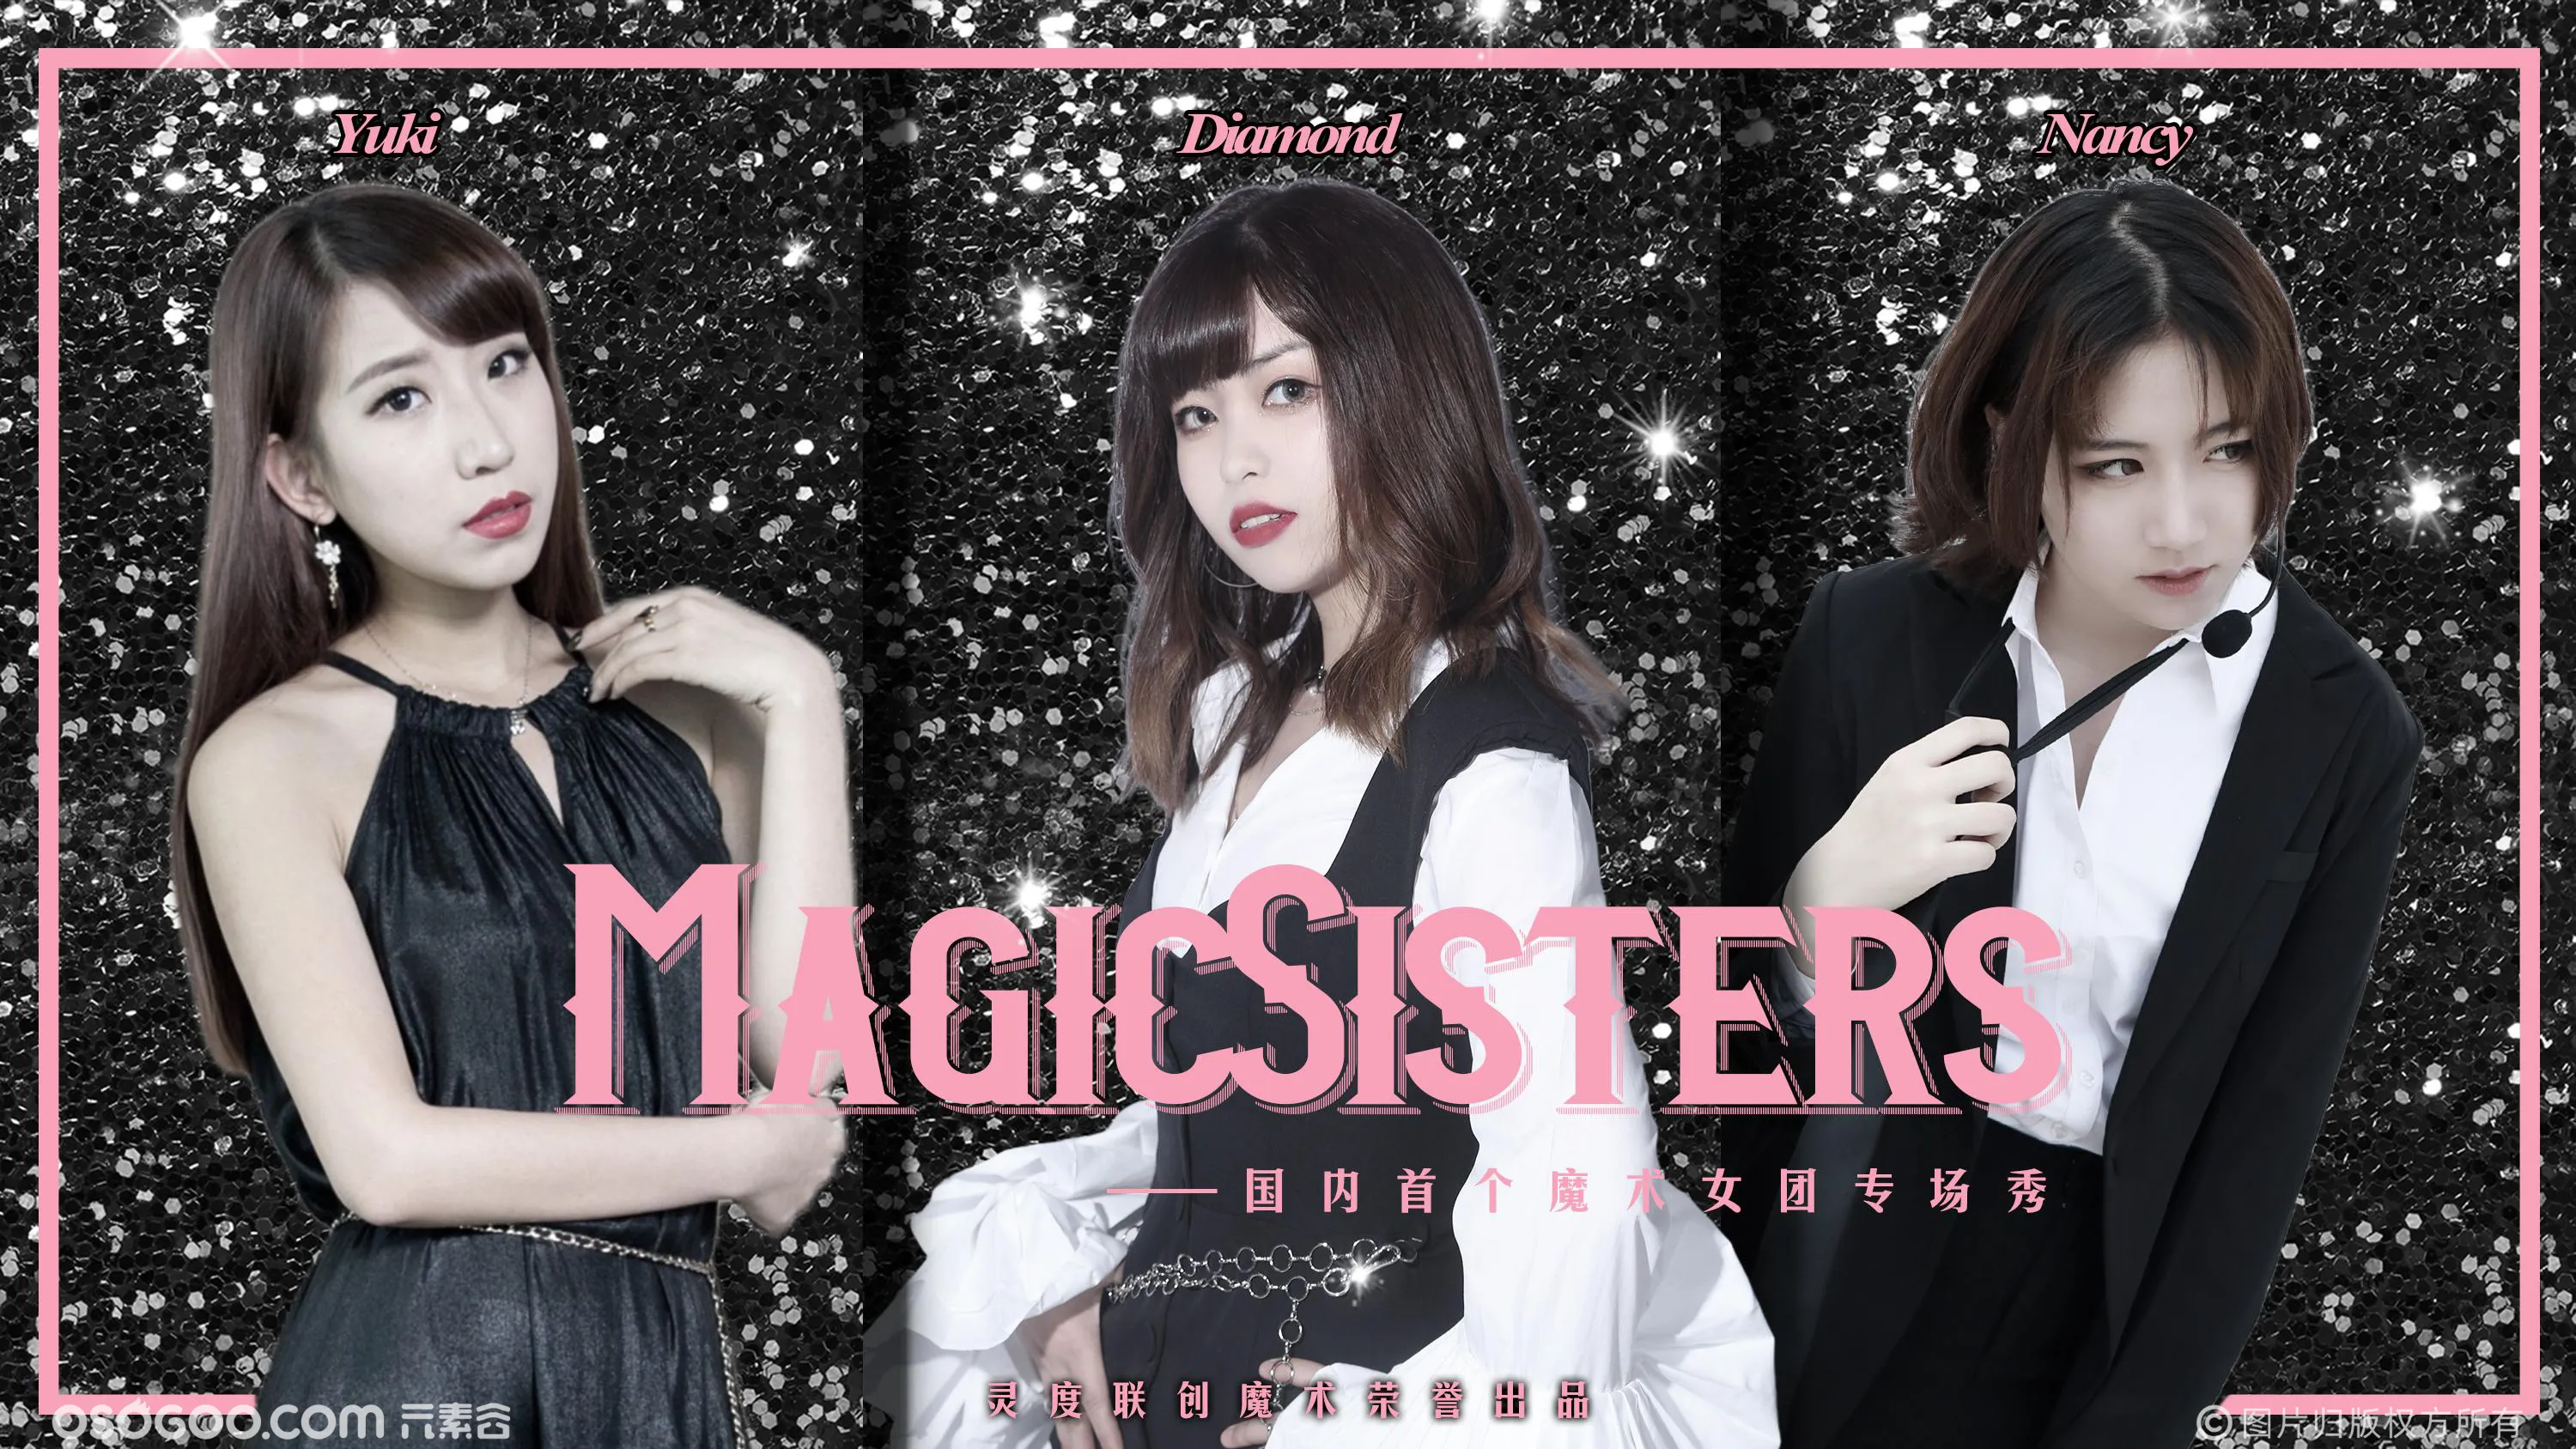 《MagicSisters》中国首个魔术女团专场秀